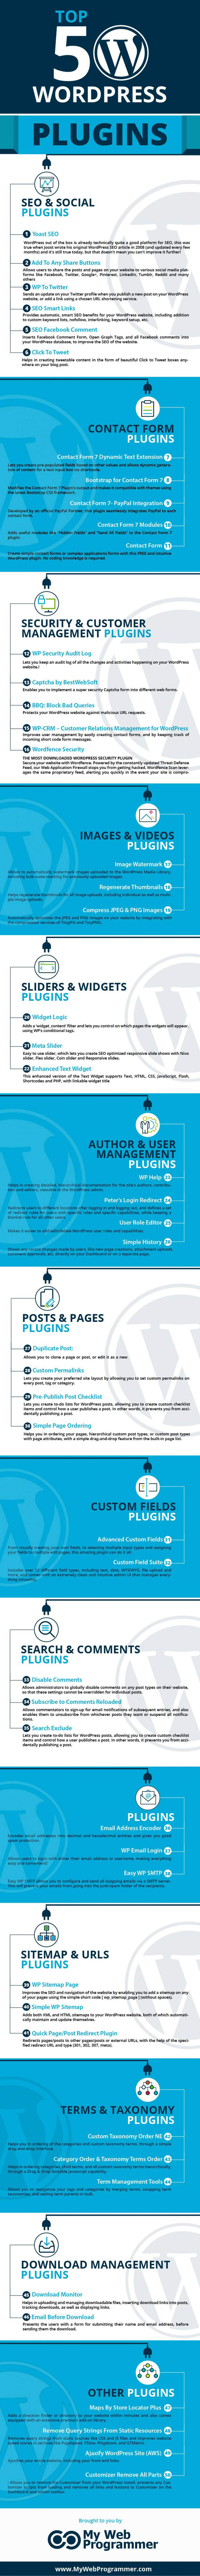 Top 50 WordPress Plugins